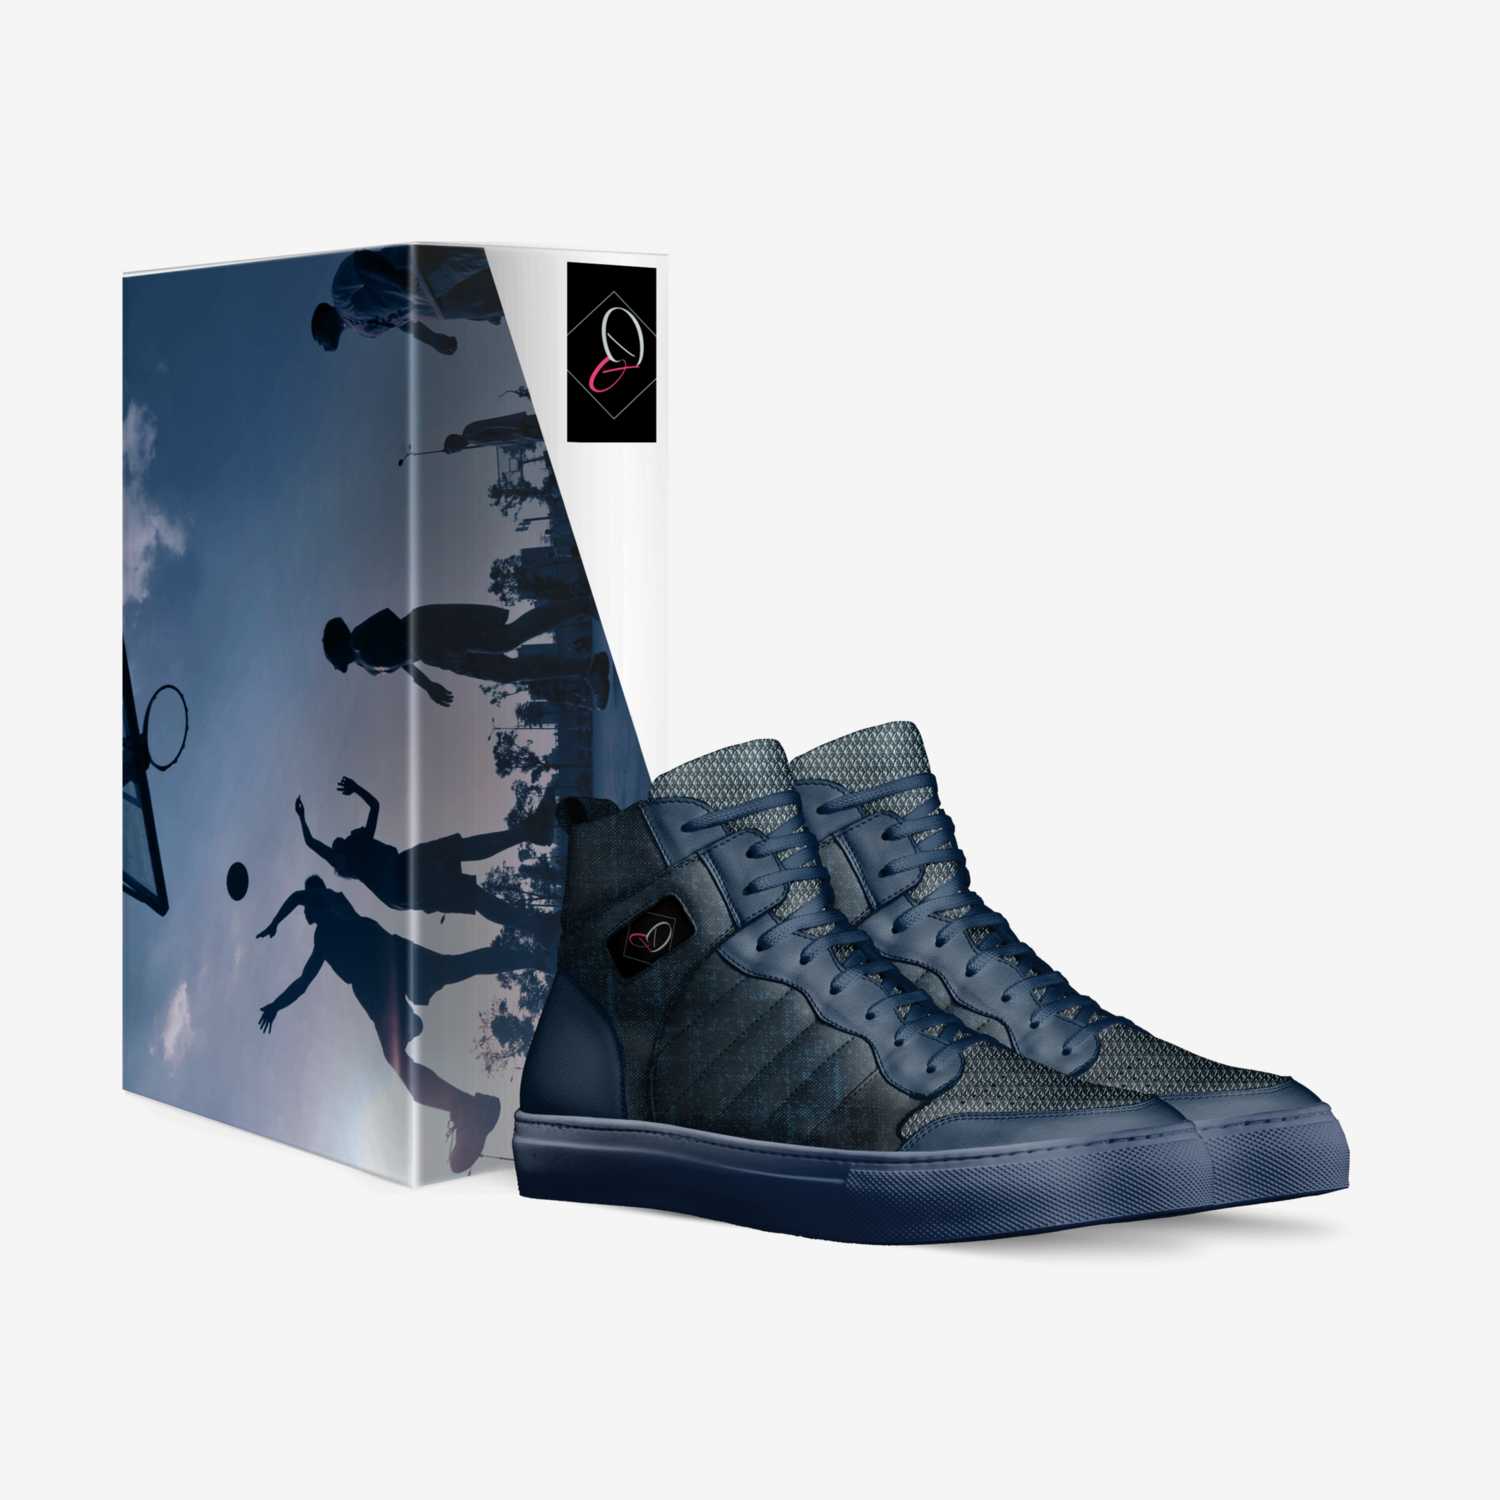 DP custom made in Italy shoes by Ldv Ldv | Box view